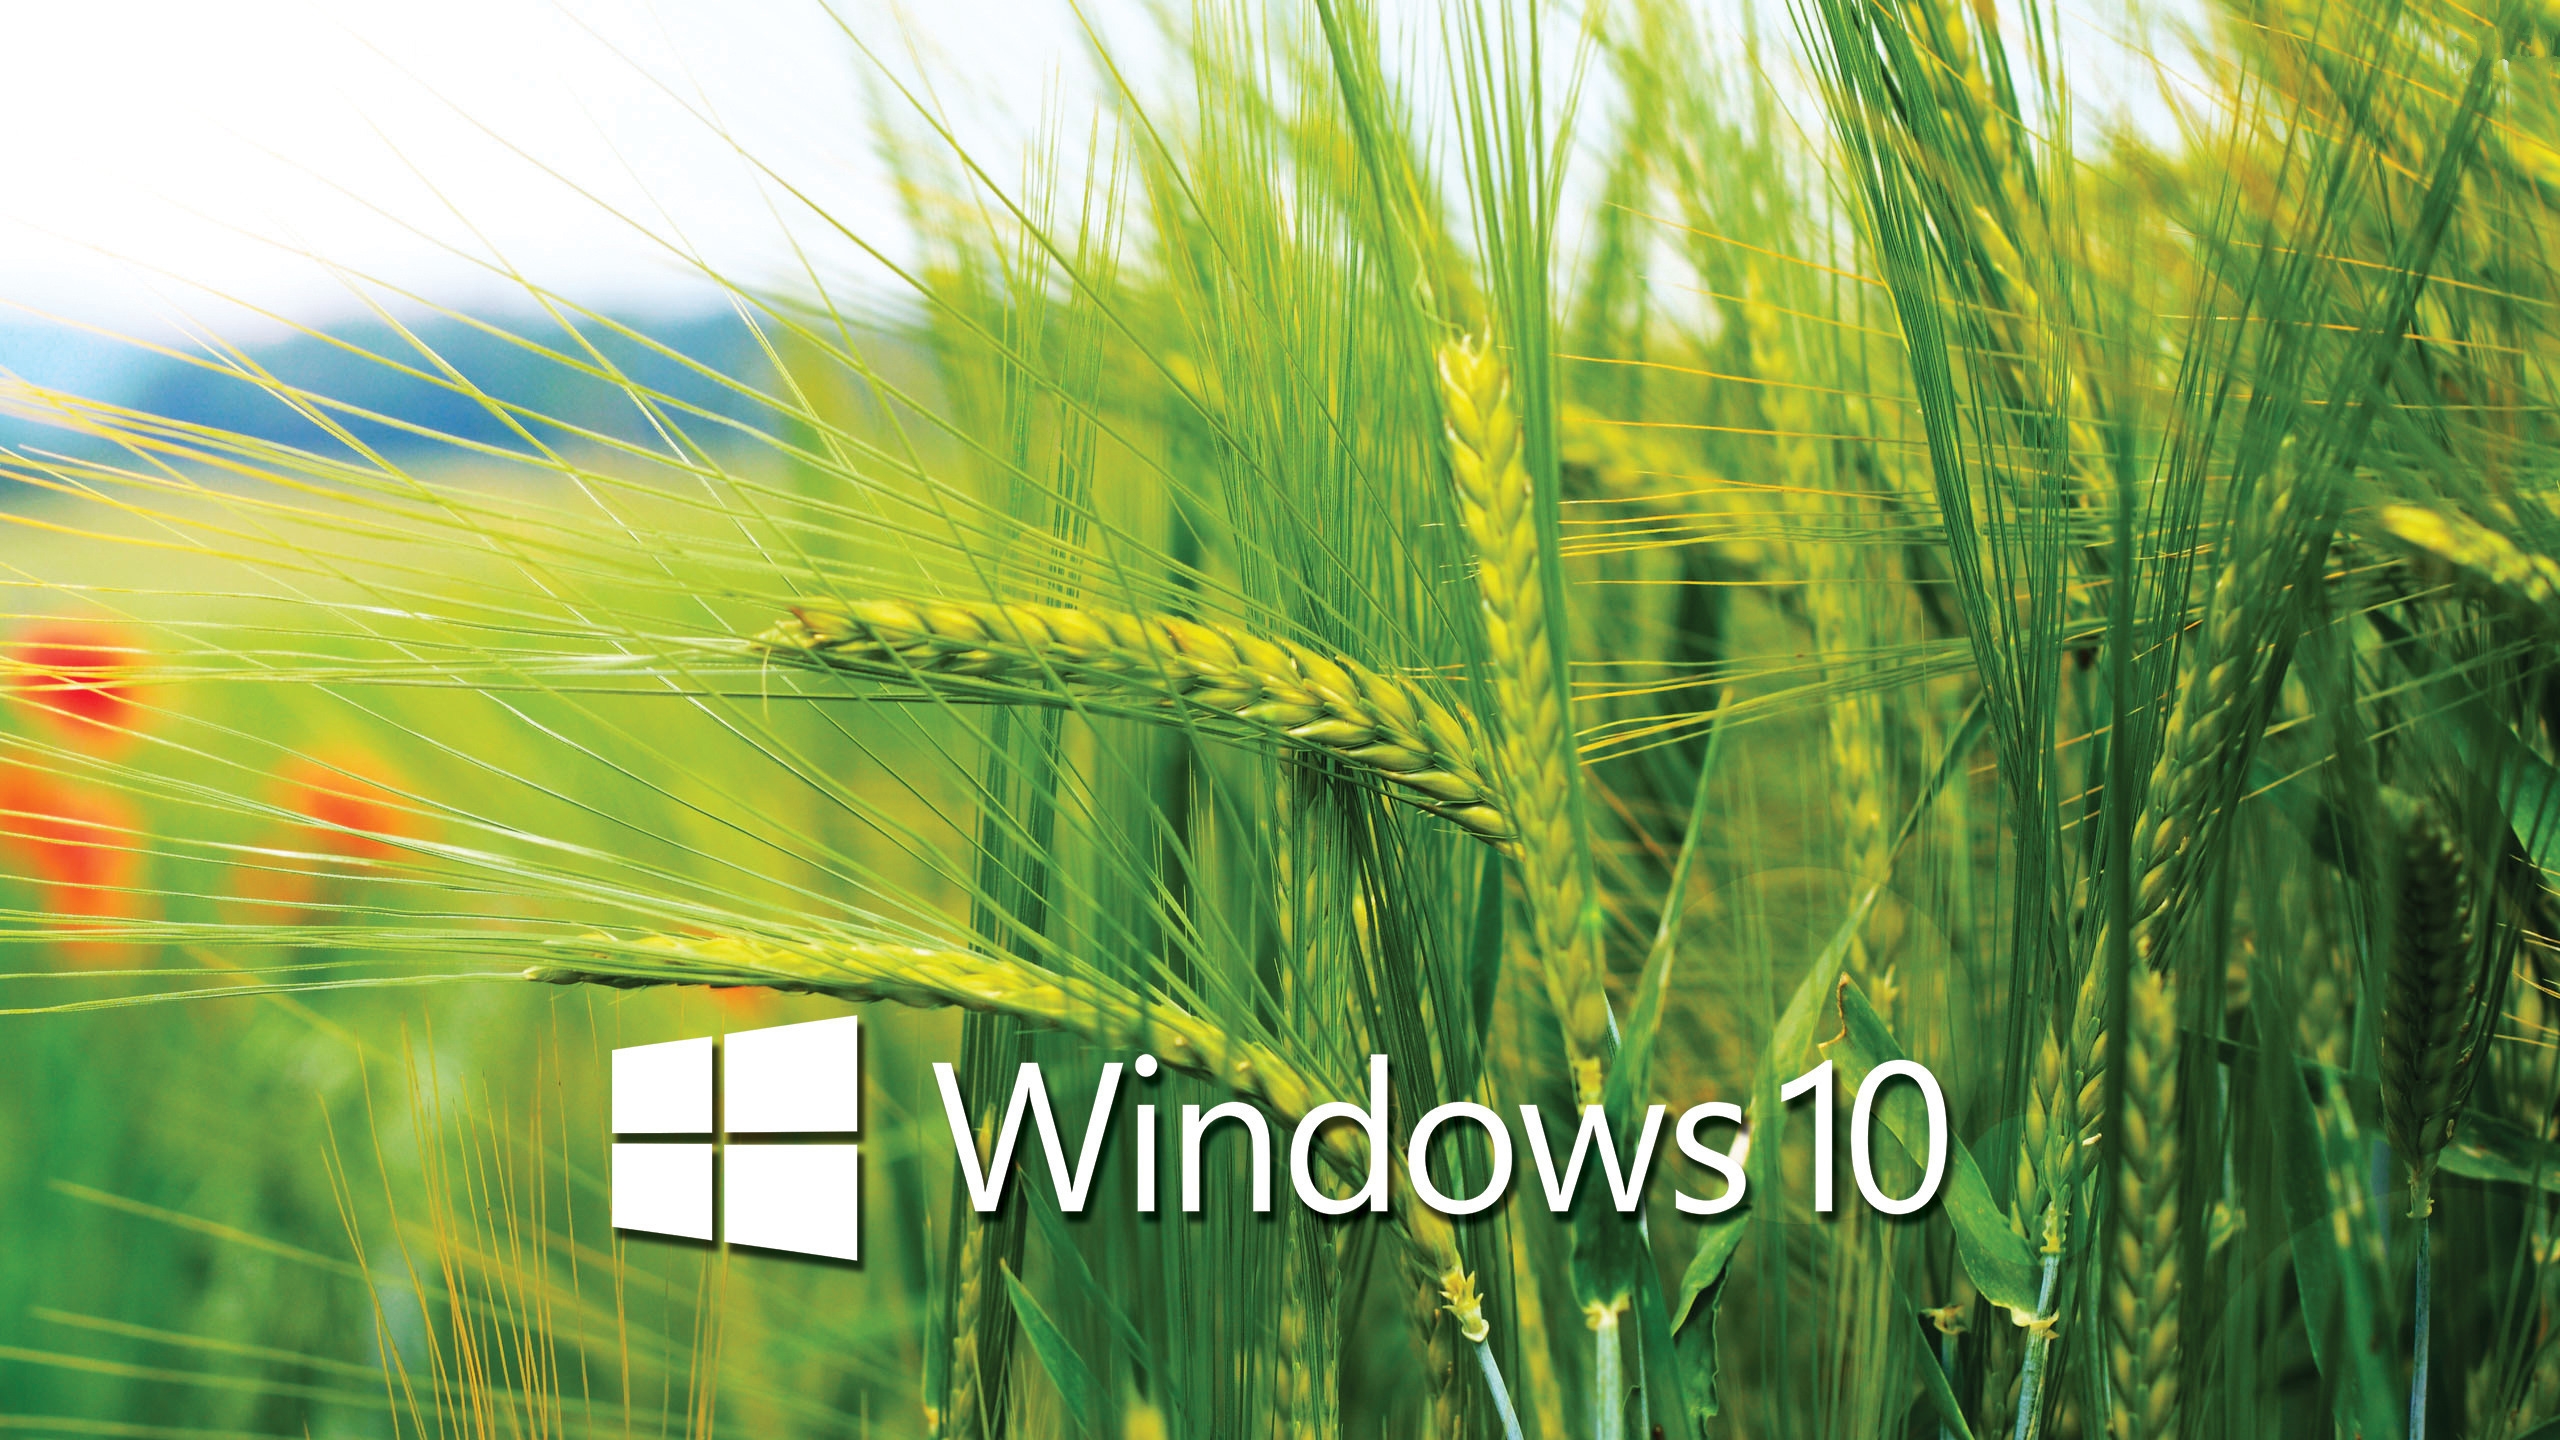 Windows-10-Wallpapers-2560x1440.jpg